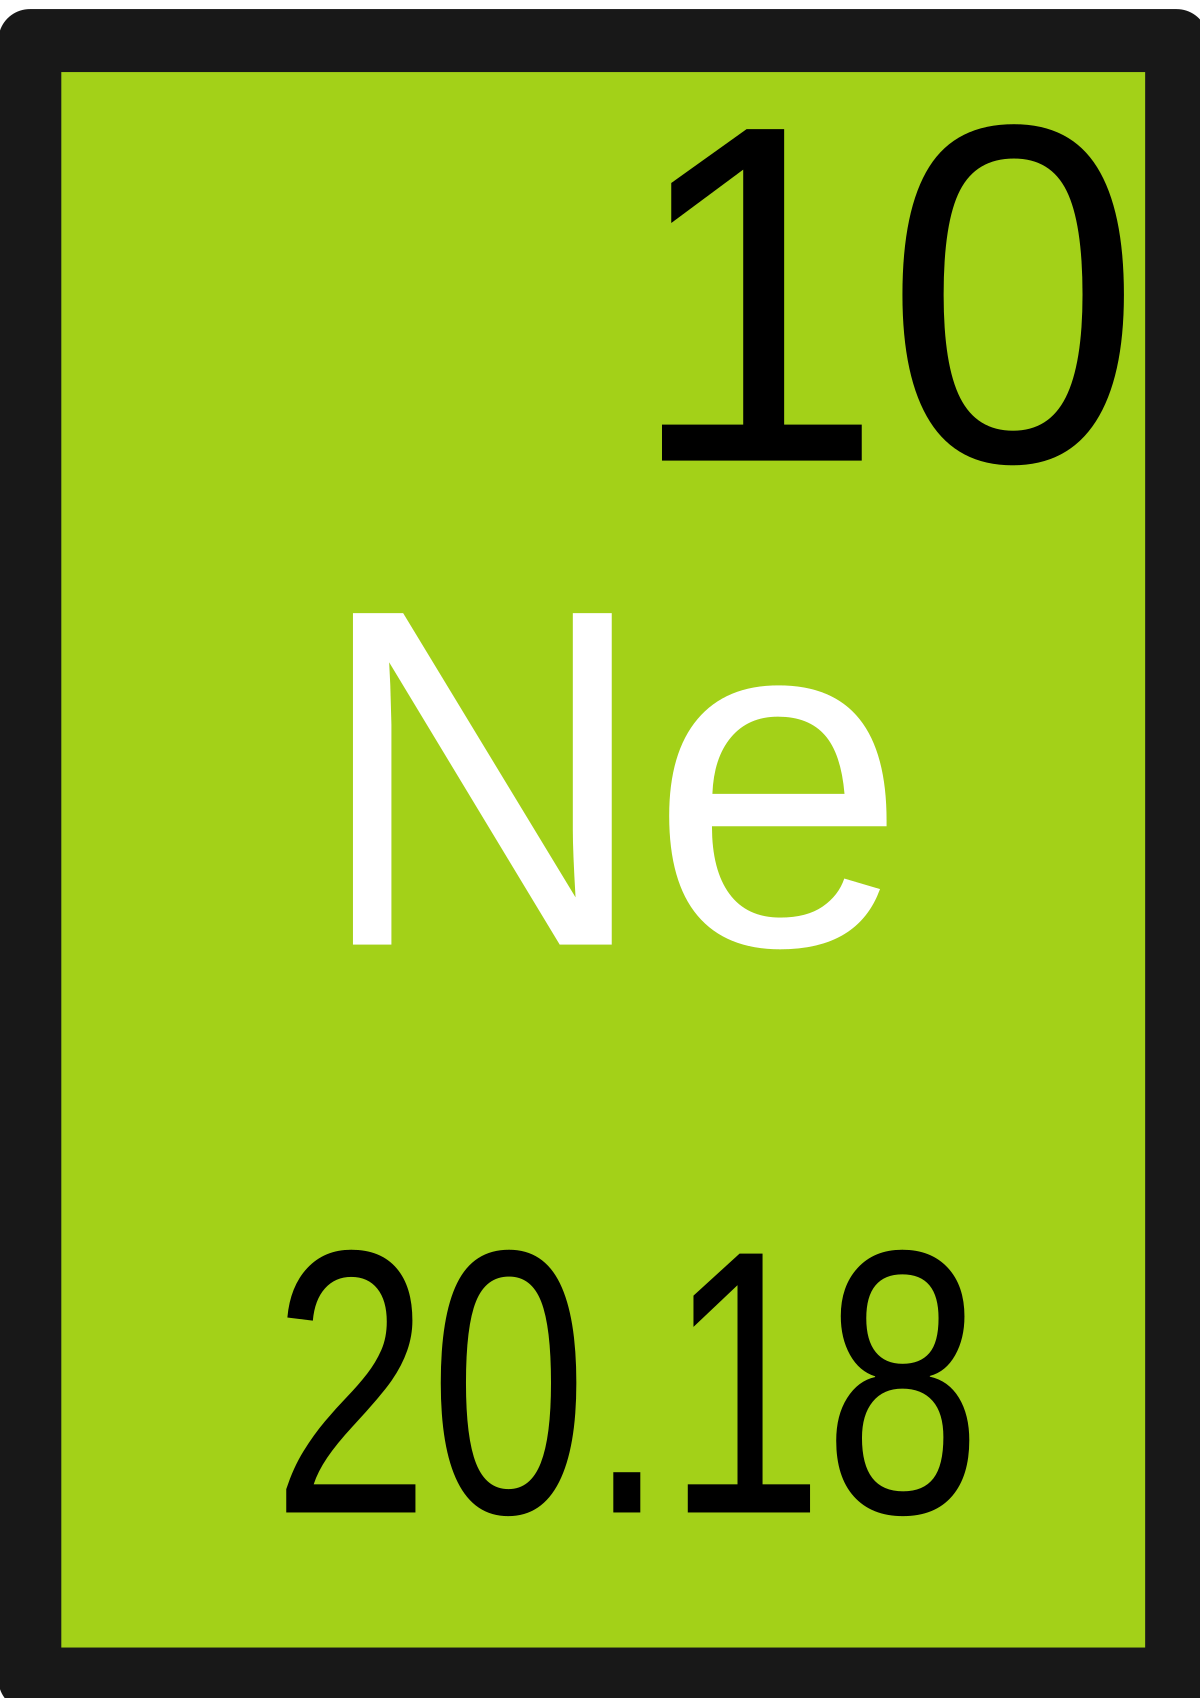 Neon - Wikipedia